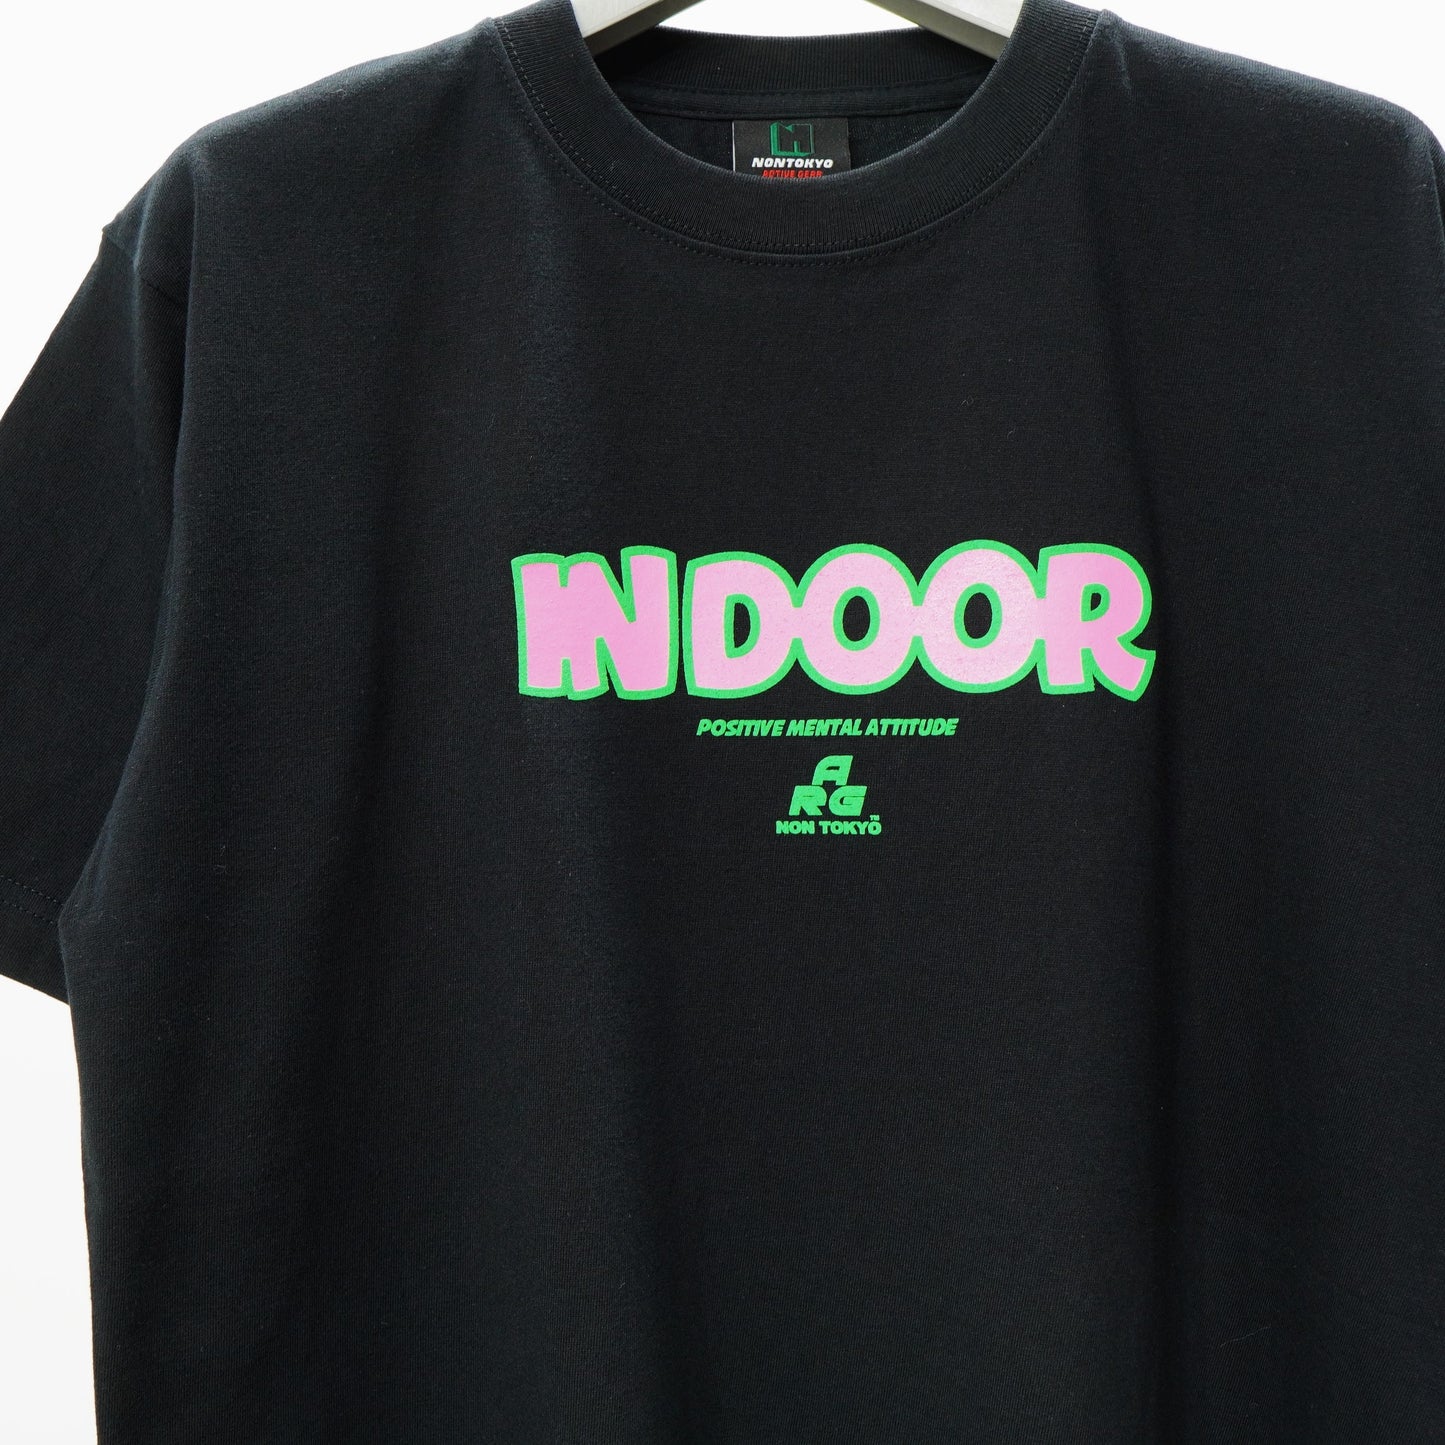 NON TOKYO / INDOOR PRINT T/S (BLACK) / 〈ノントーキョー〉インドアプリントTシャツ  (ブラック)